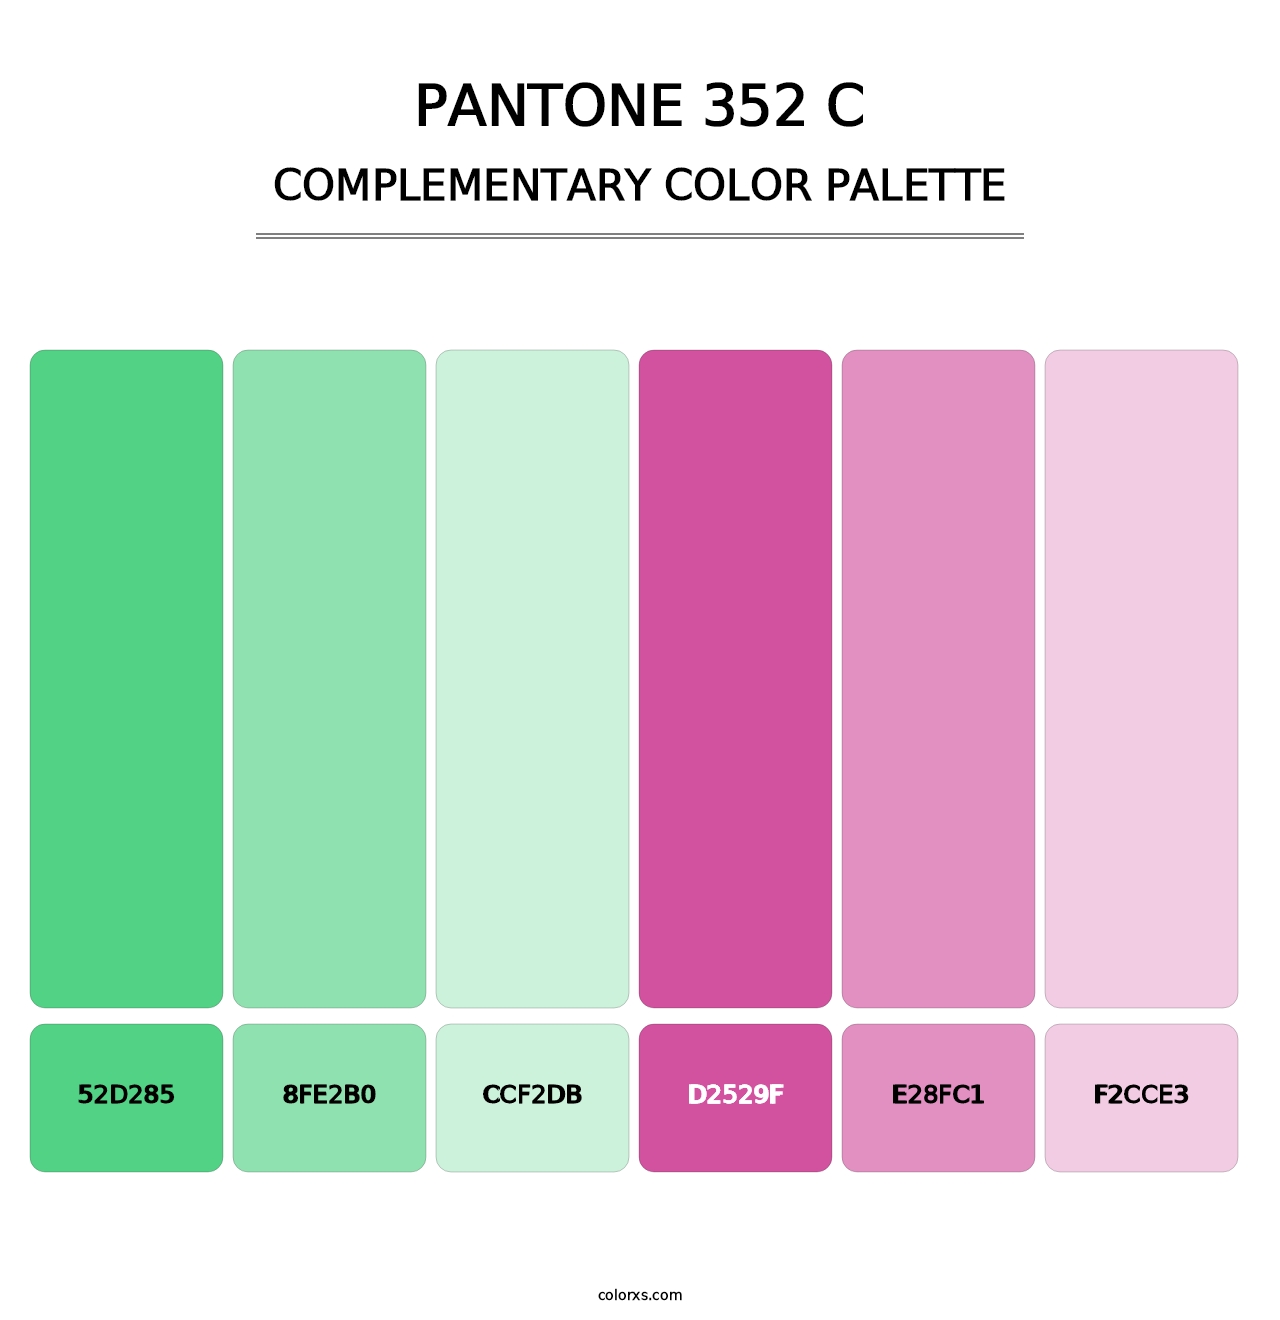 PANTONE 352 C - Complementary Color Palette